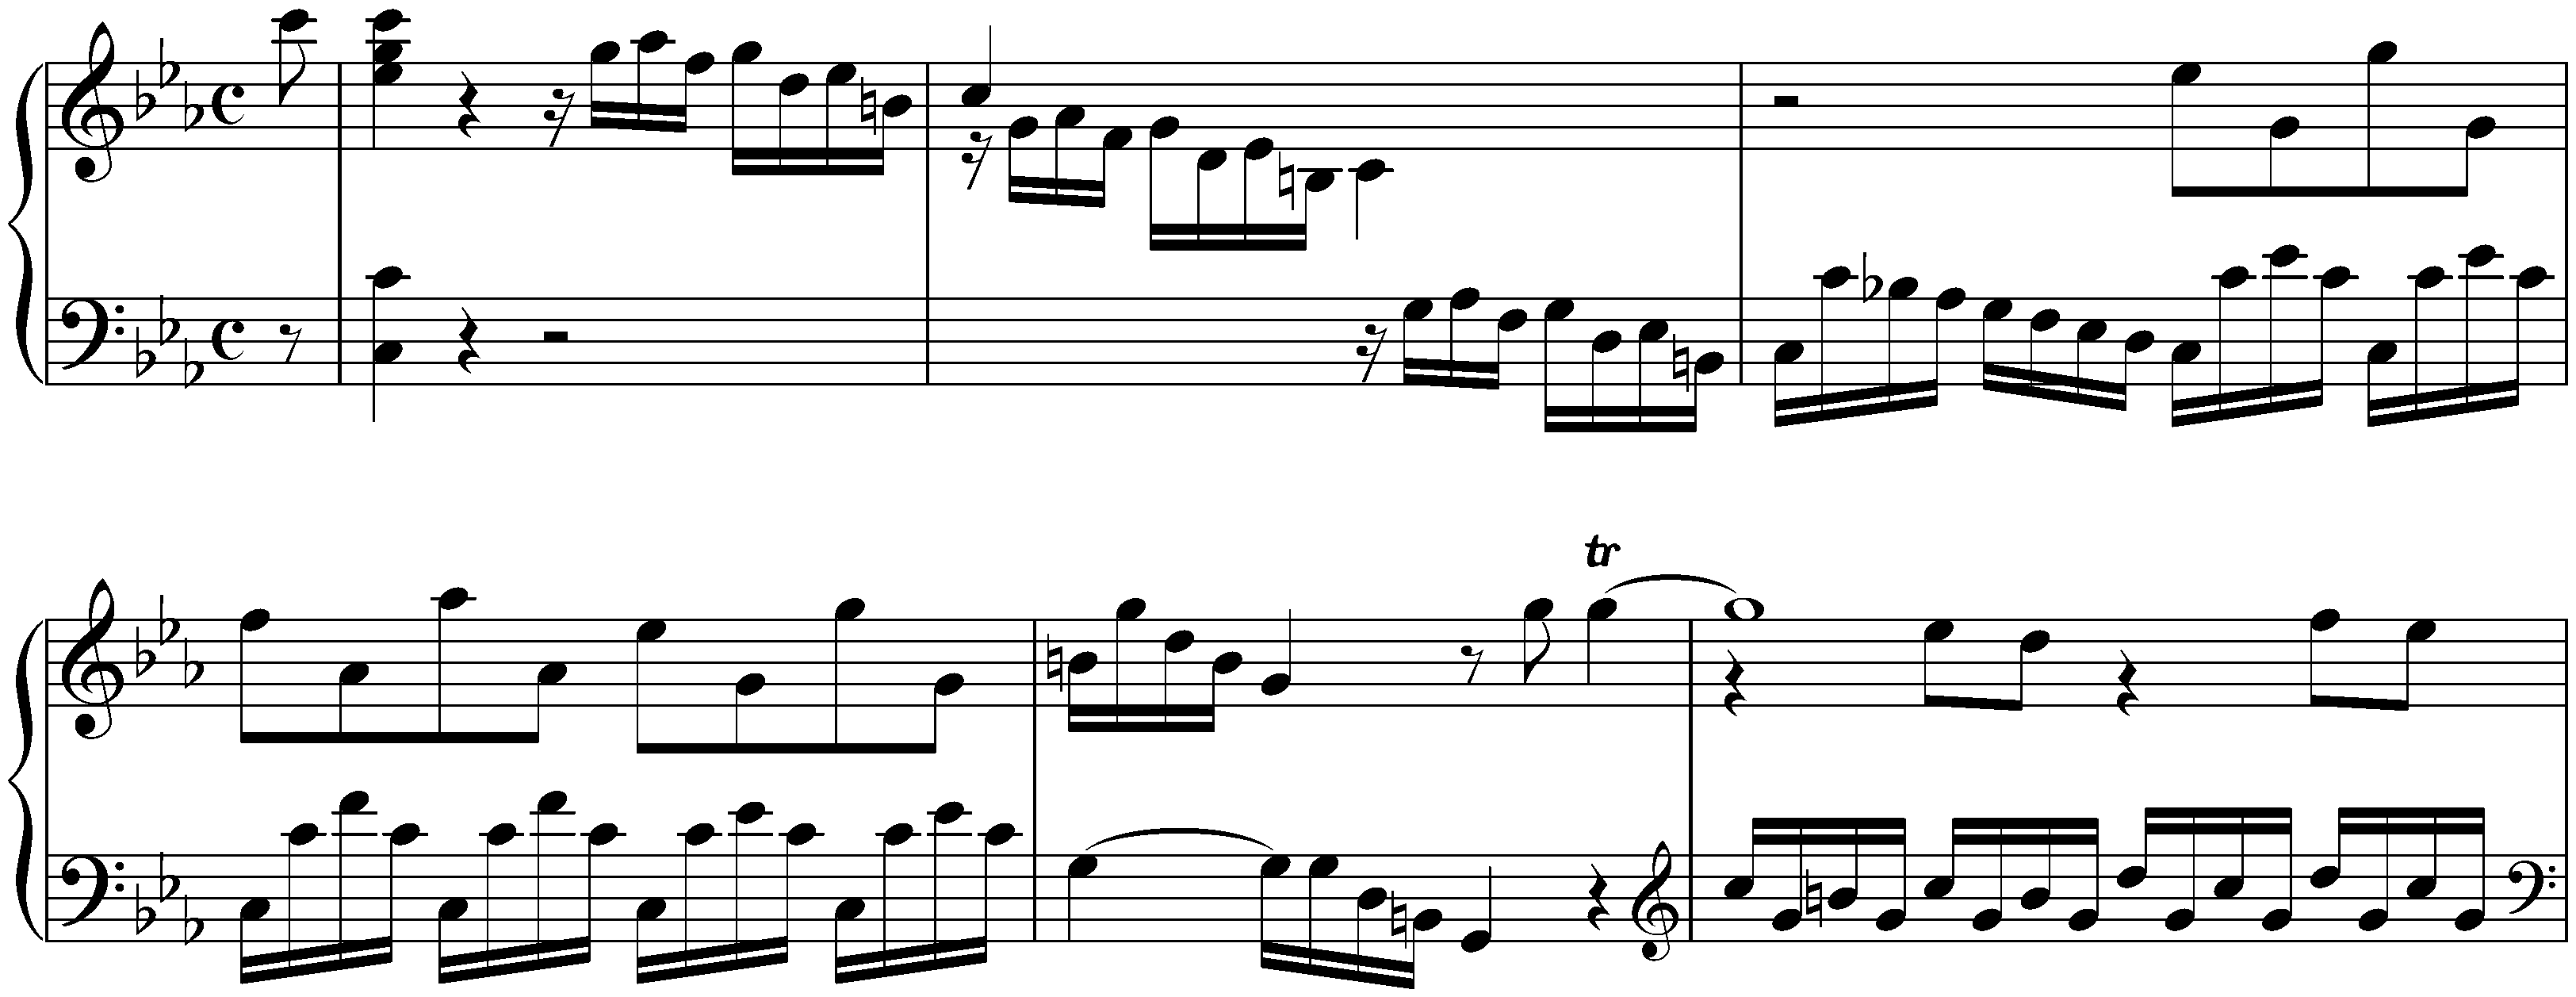 Allemande in C minor, BWV 834